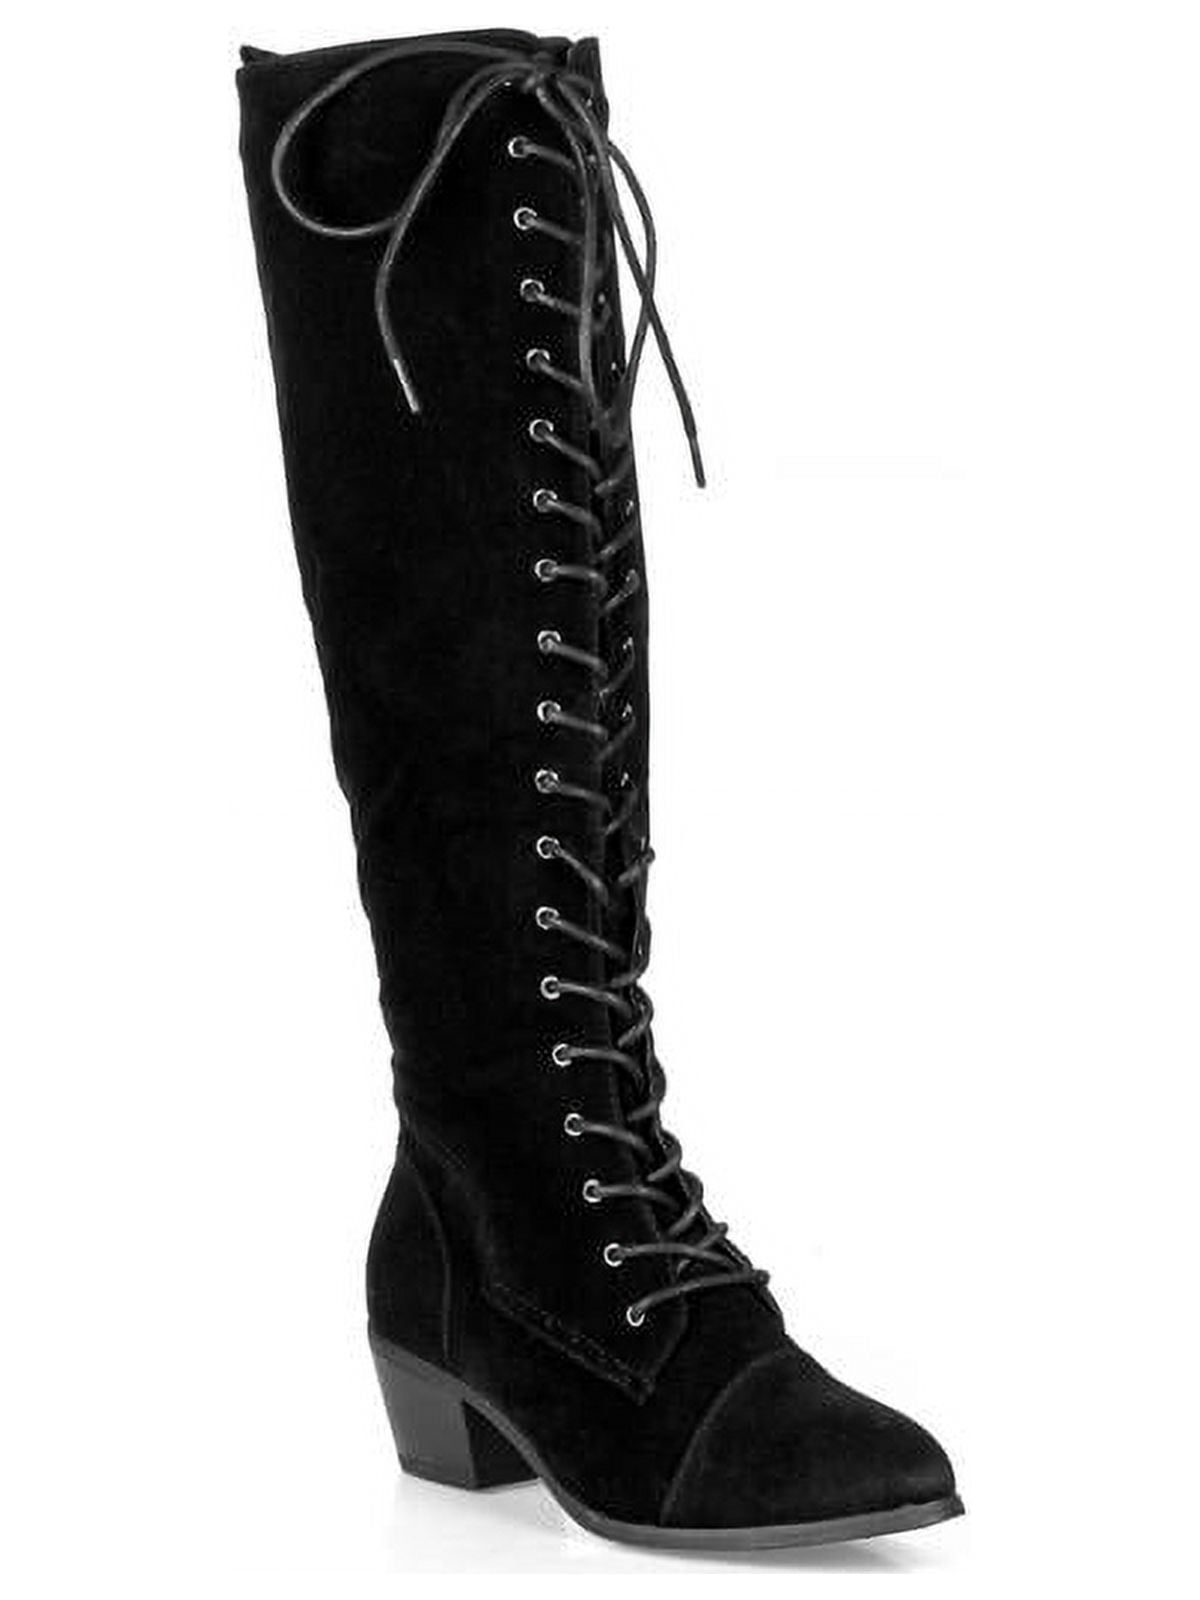 Nature Breeze Lace up Women's Combat Boots in Black - Walmart.com